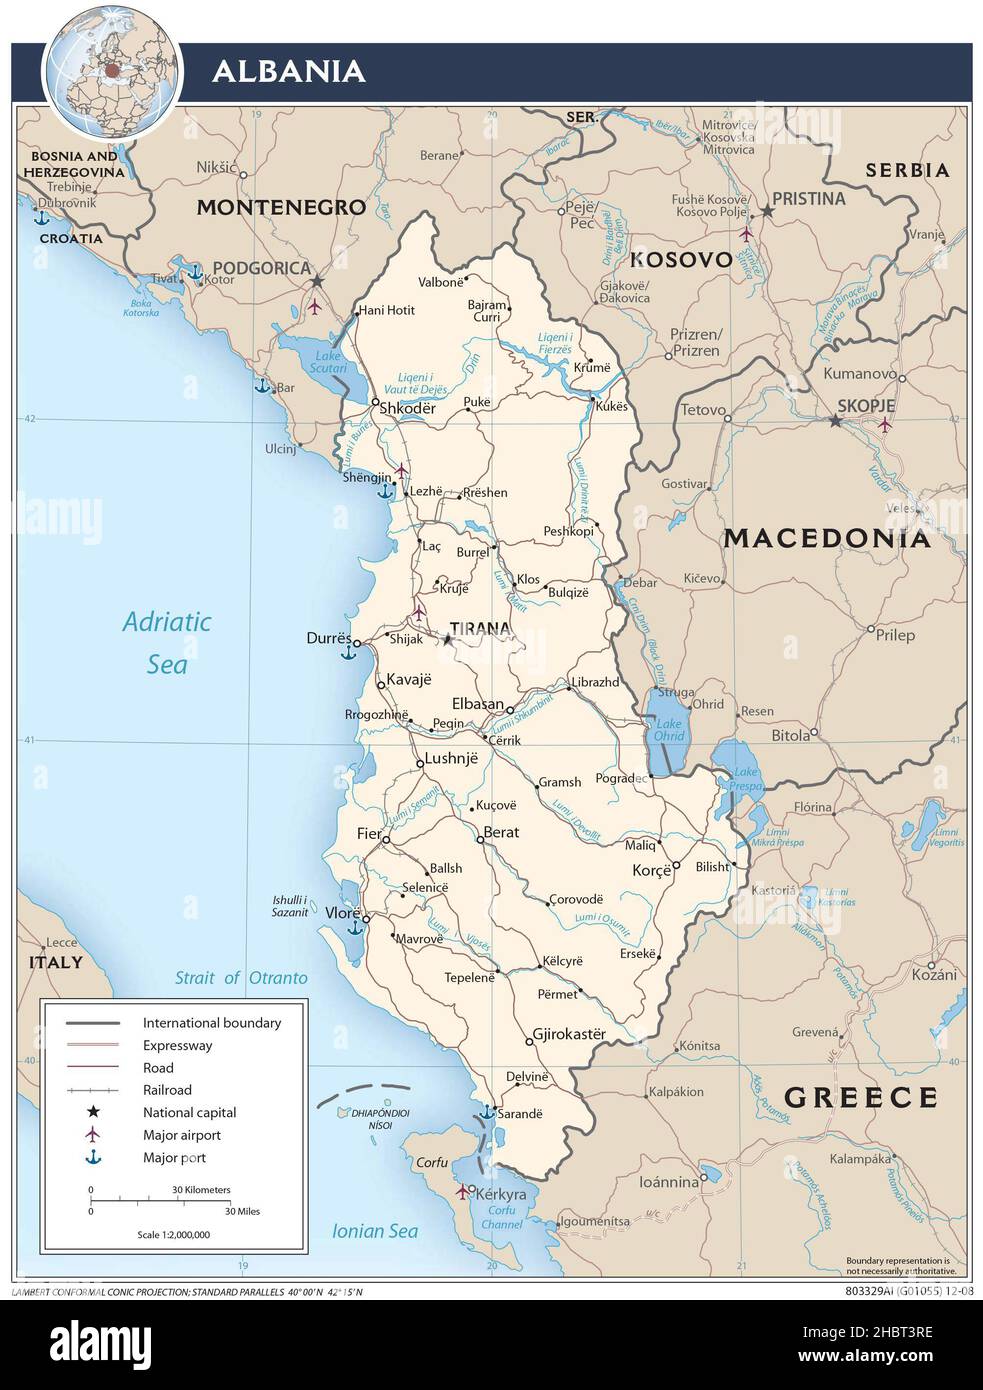 2008 Albania Physiography Map Stock Photo